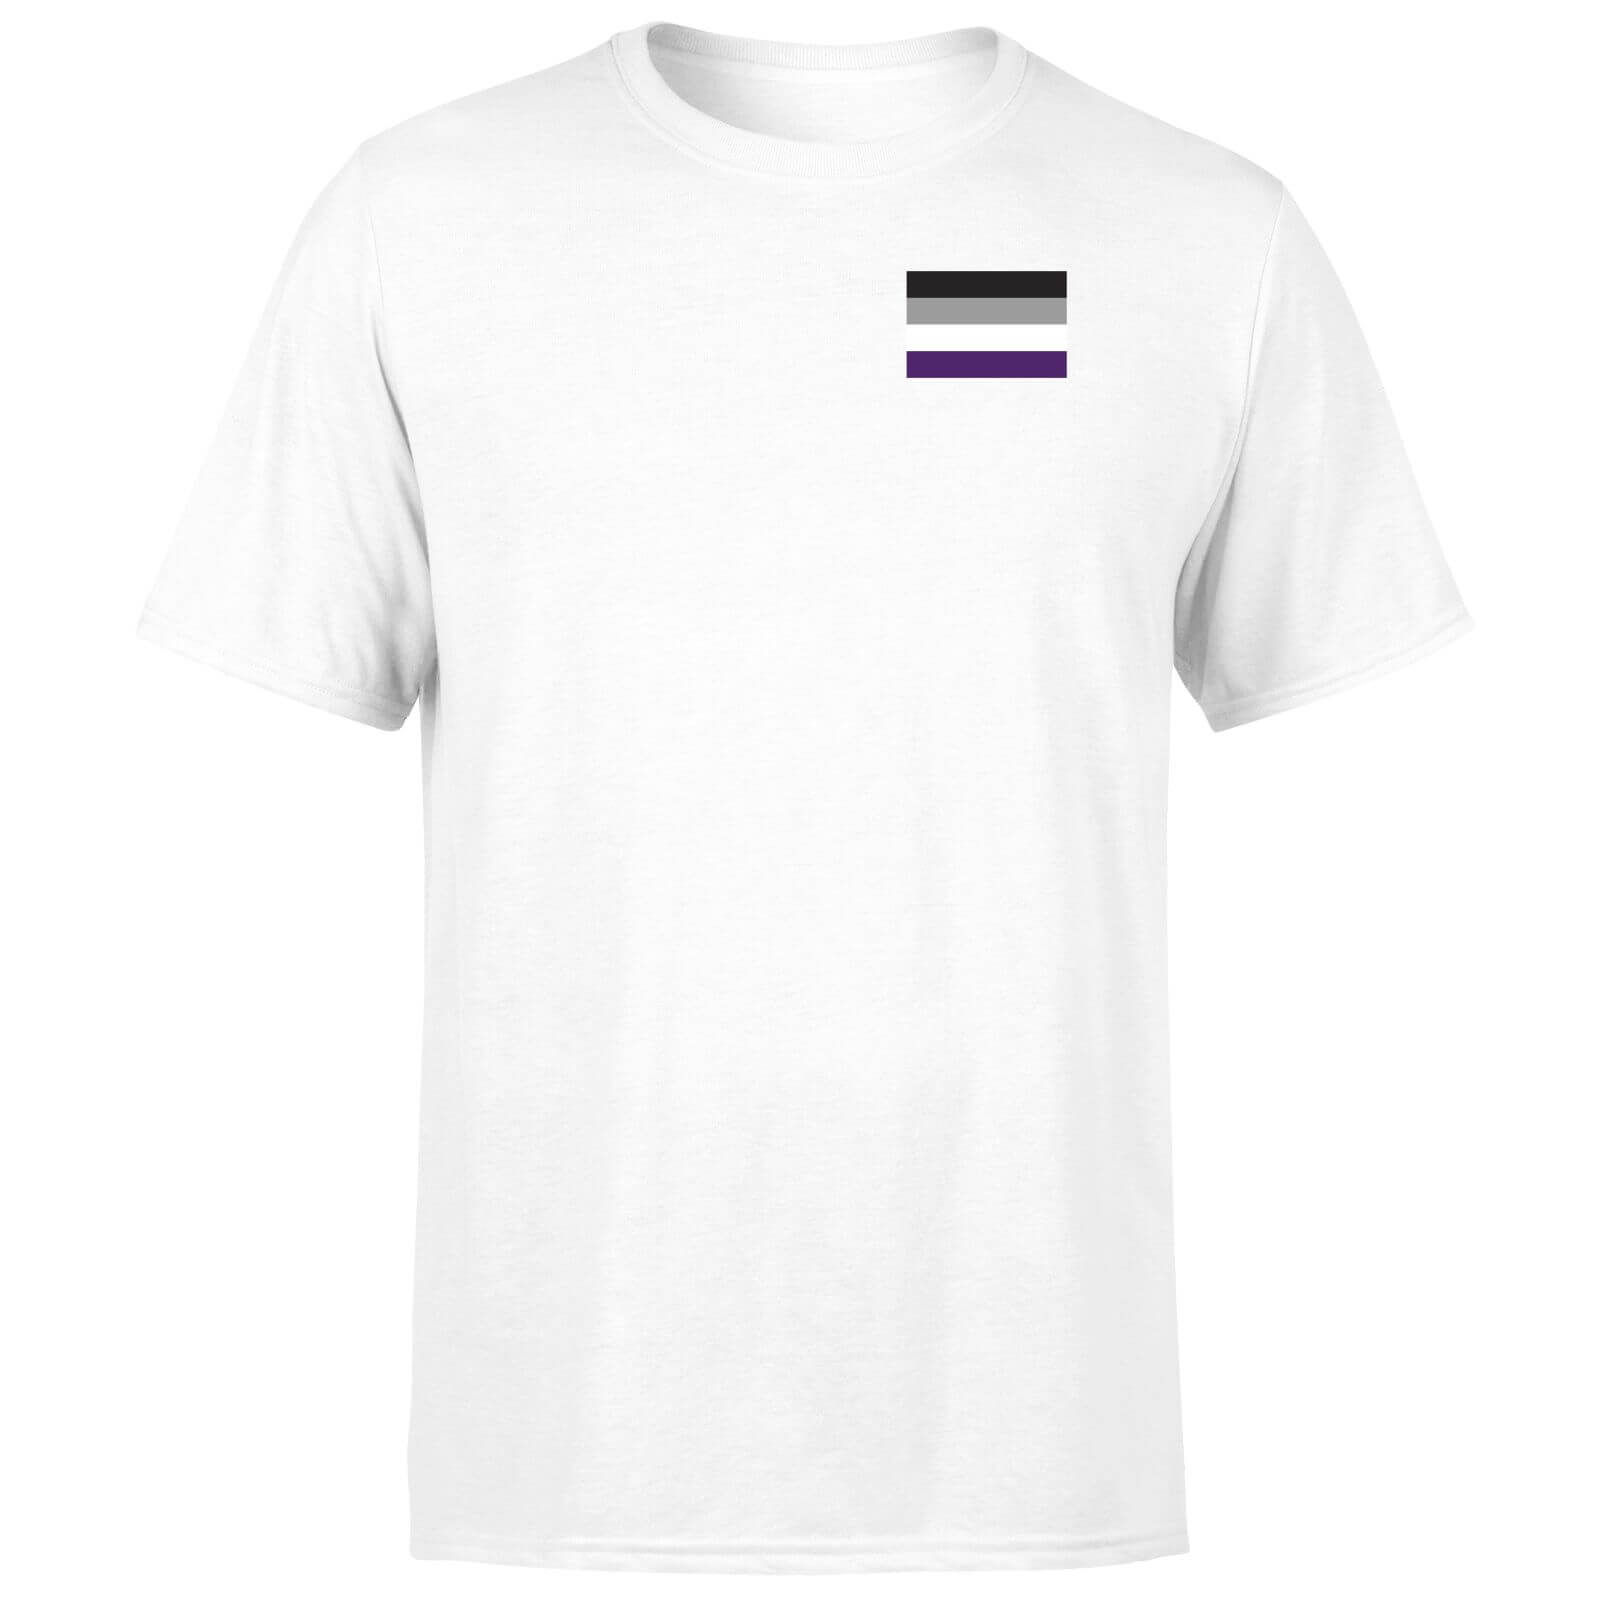 Asexual Flag T-Shirt - White - XS - White